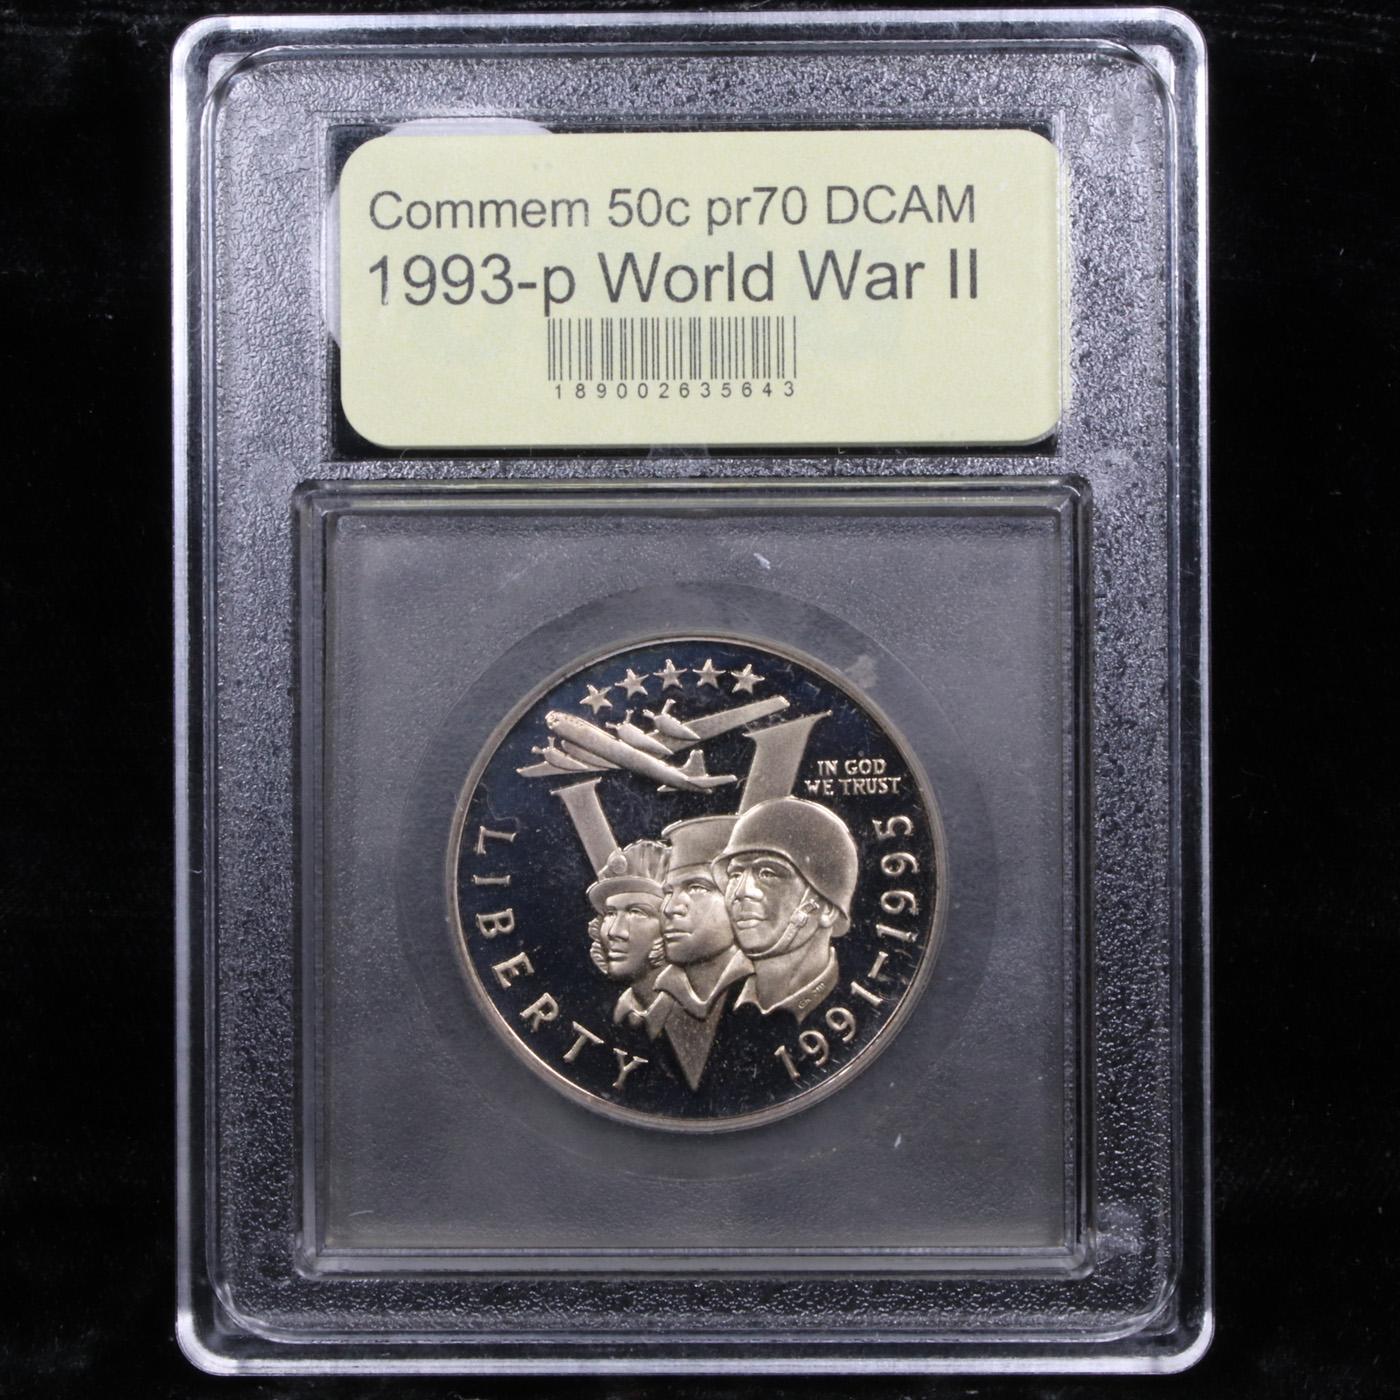 Proof ***Auction Highlight*** 1991-1995-P WWII Modern Commem Half Dollar 50c Graded GEM++ Proof Deep